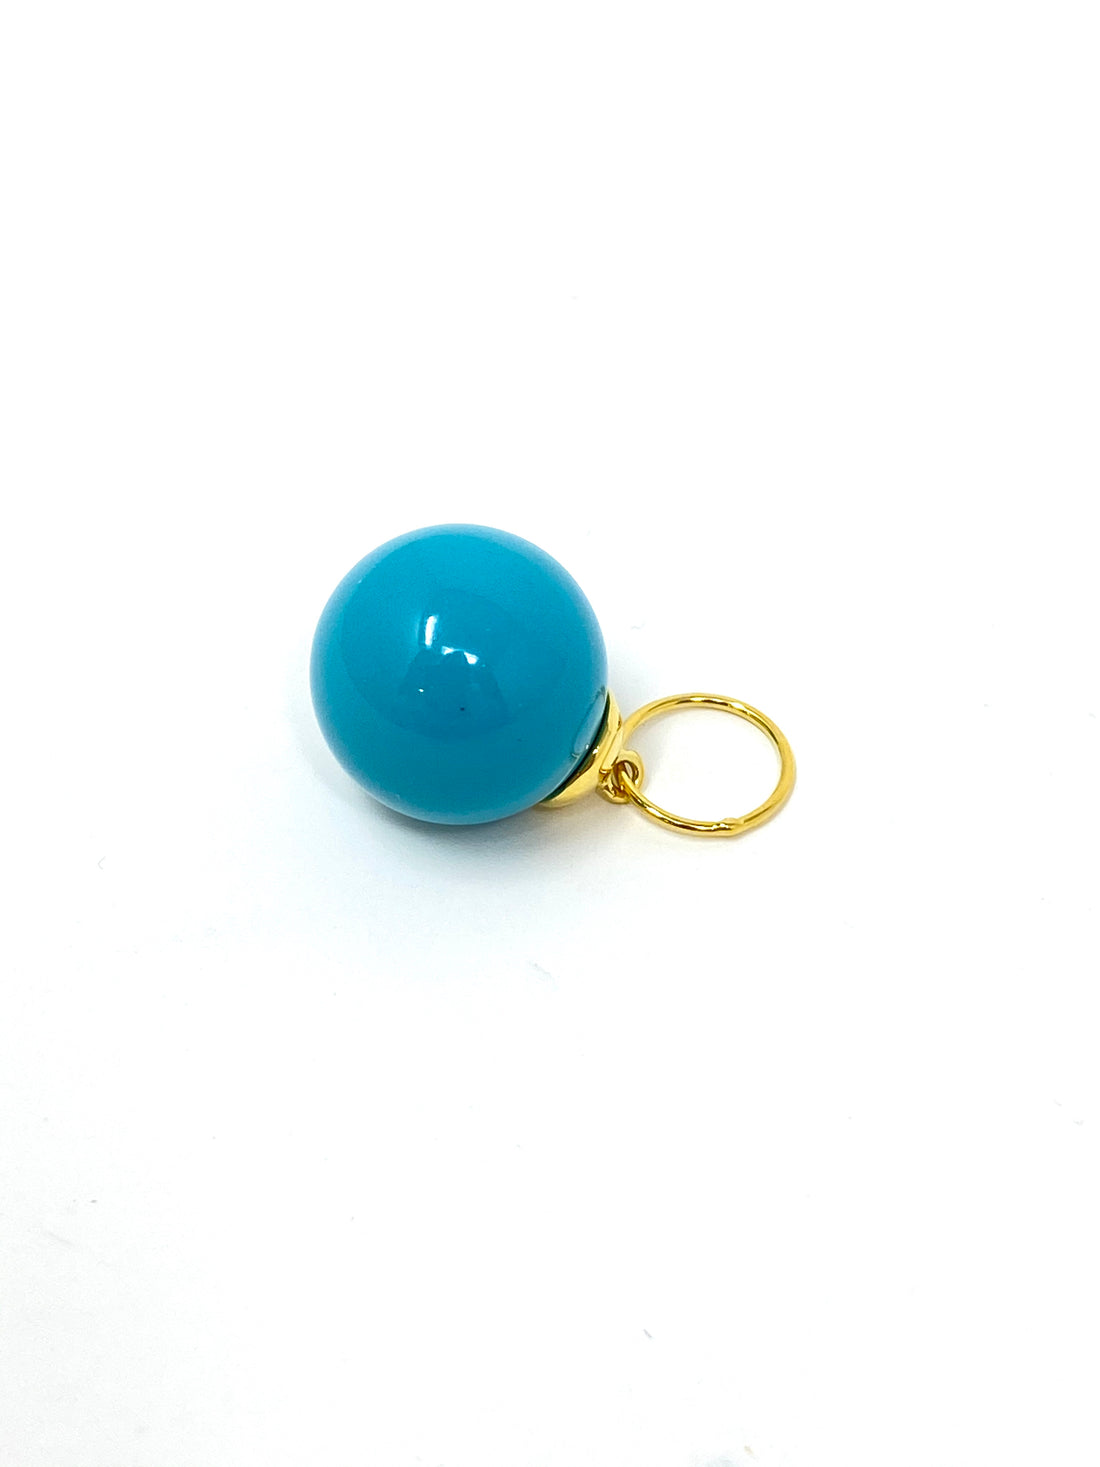 Charming Turquoise Ball Charm